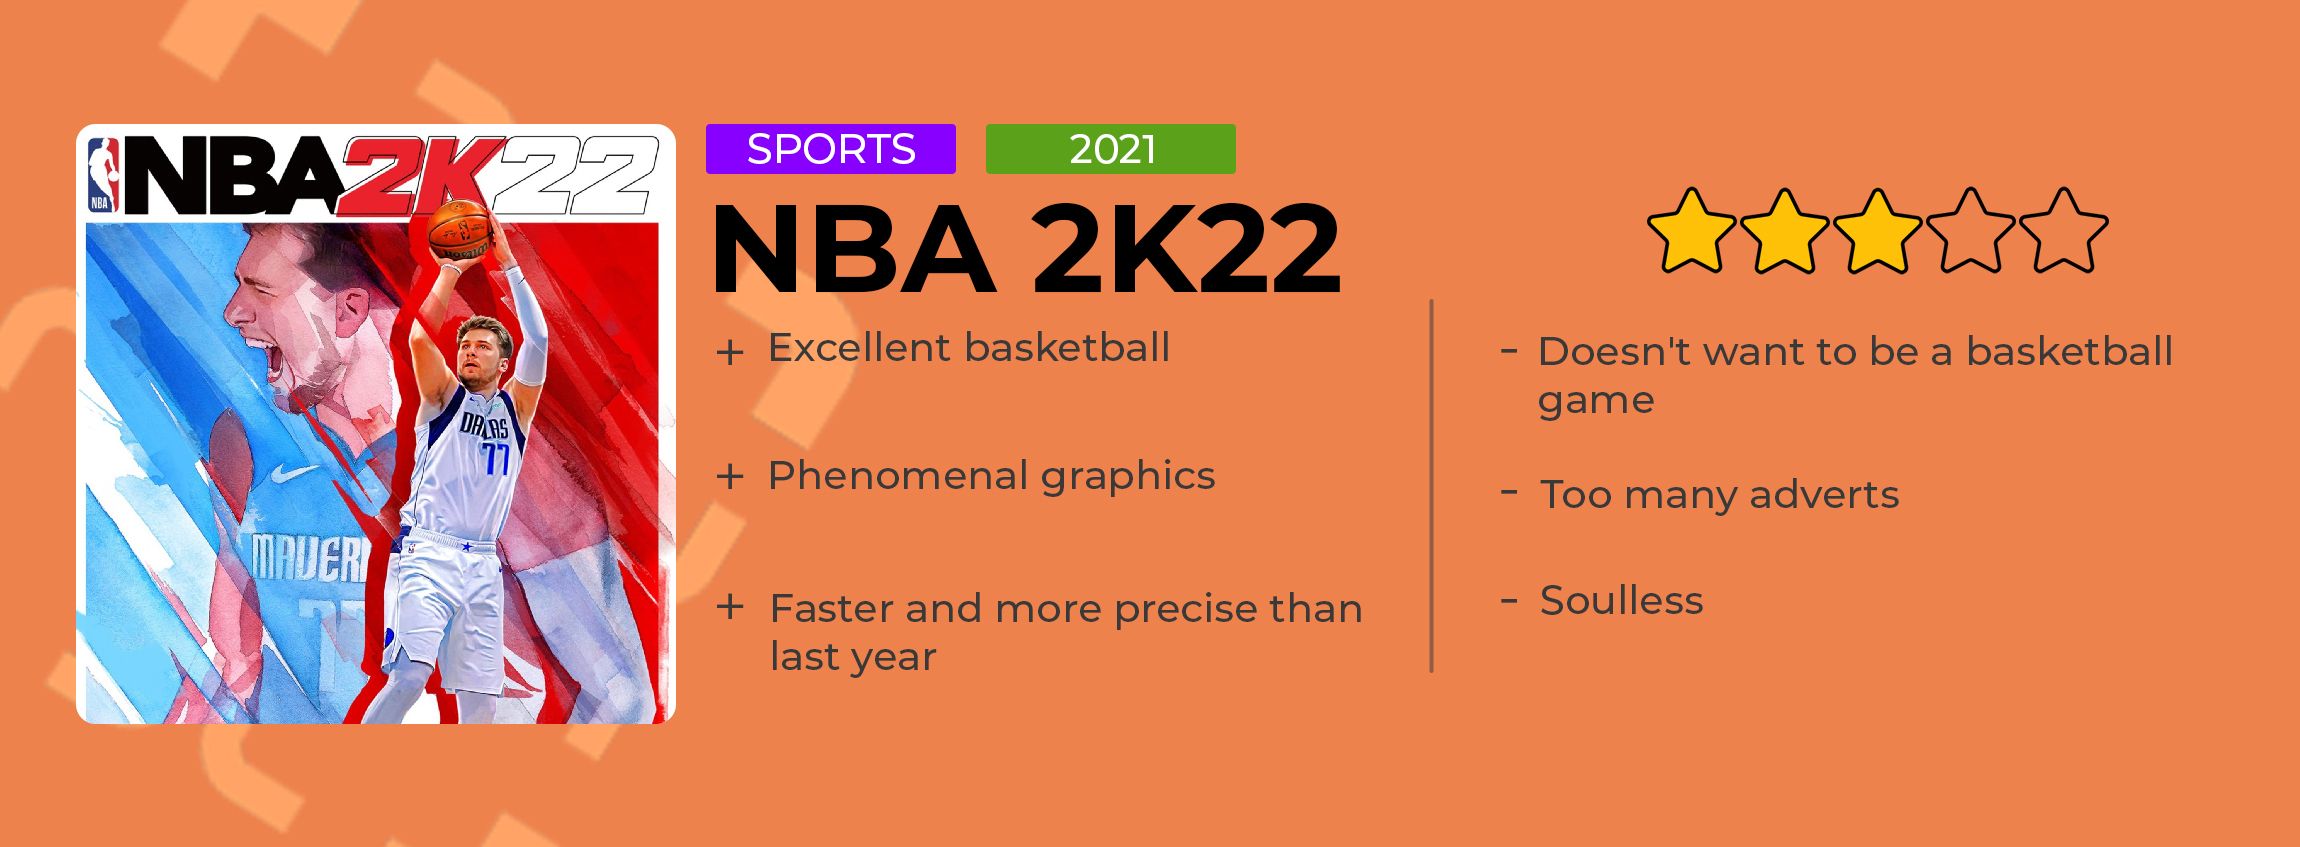 NBA 2K22 Review Card